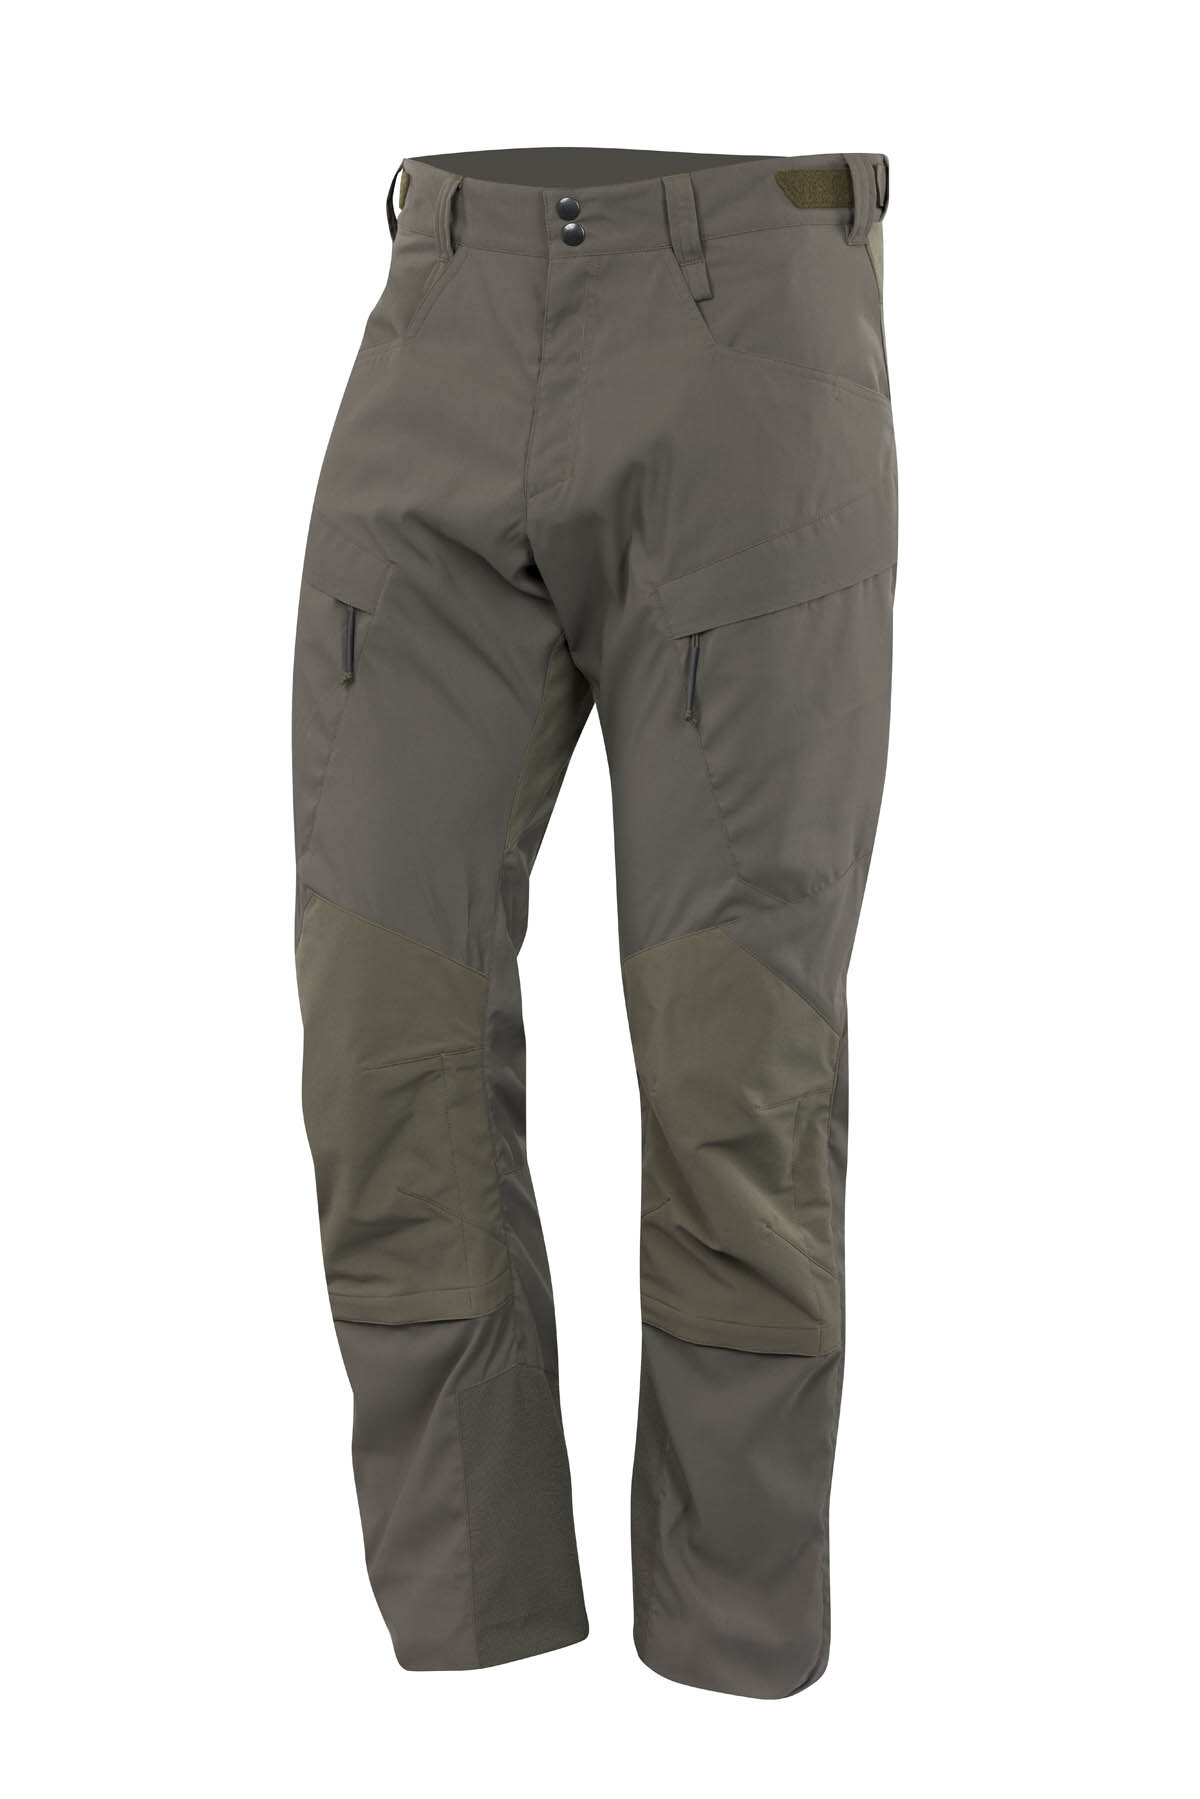 Softshellové kalhoty Operator Tilak Military Gear® – Khaki (Barva: Khaki, Velikost: XL)